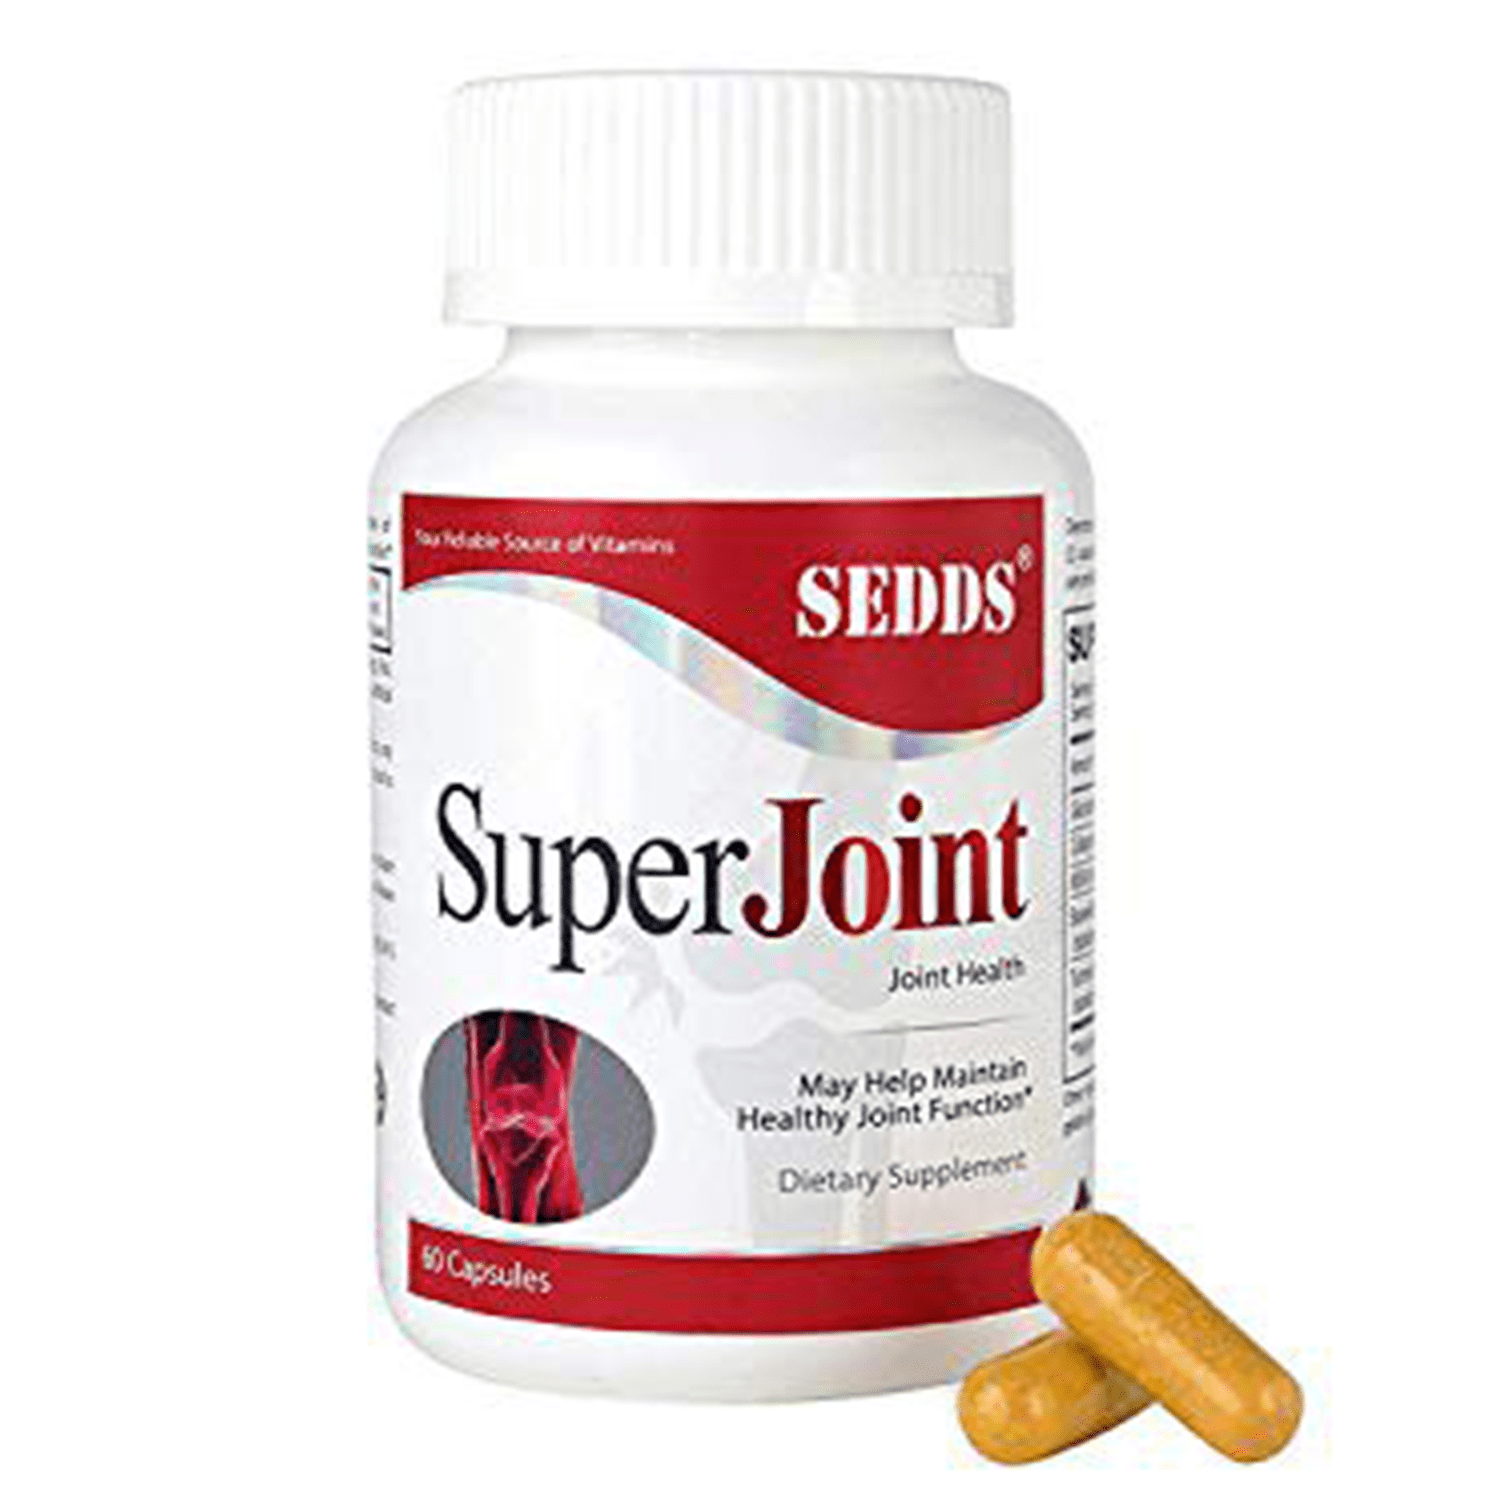 joint pain supplements